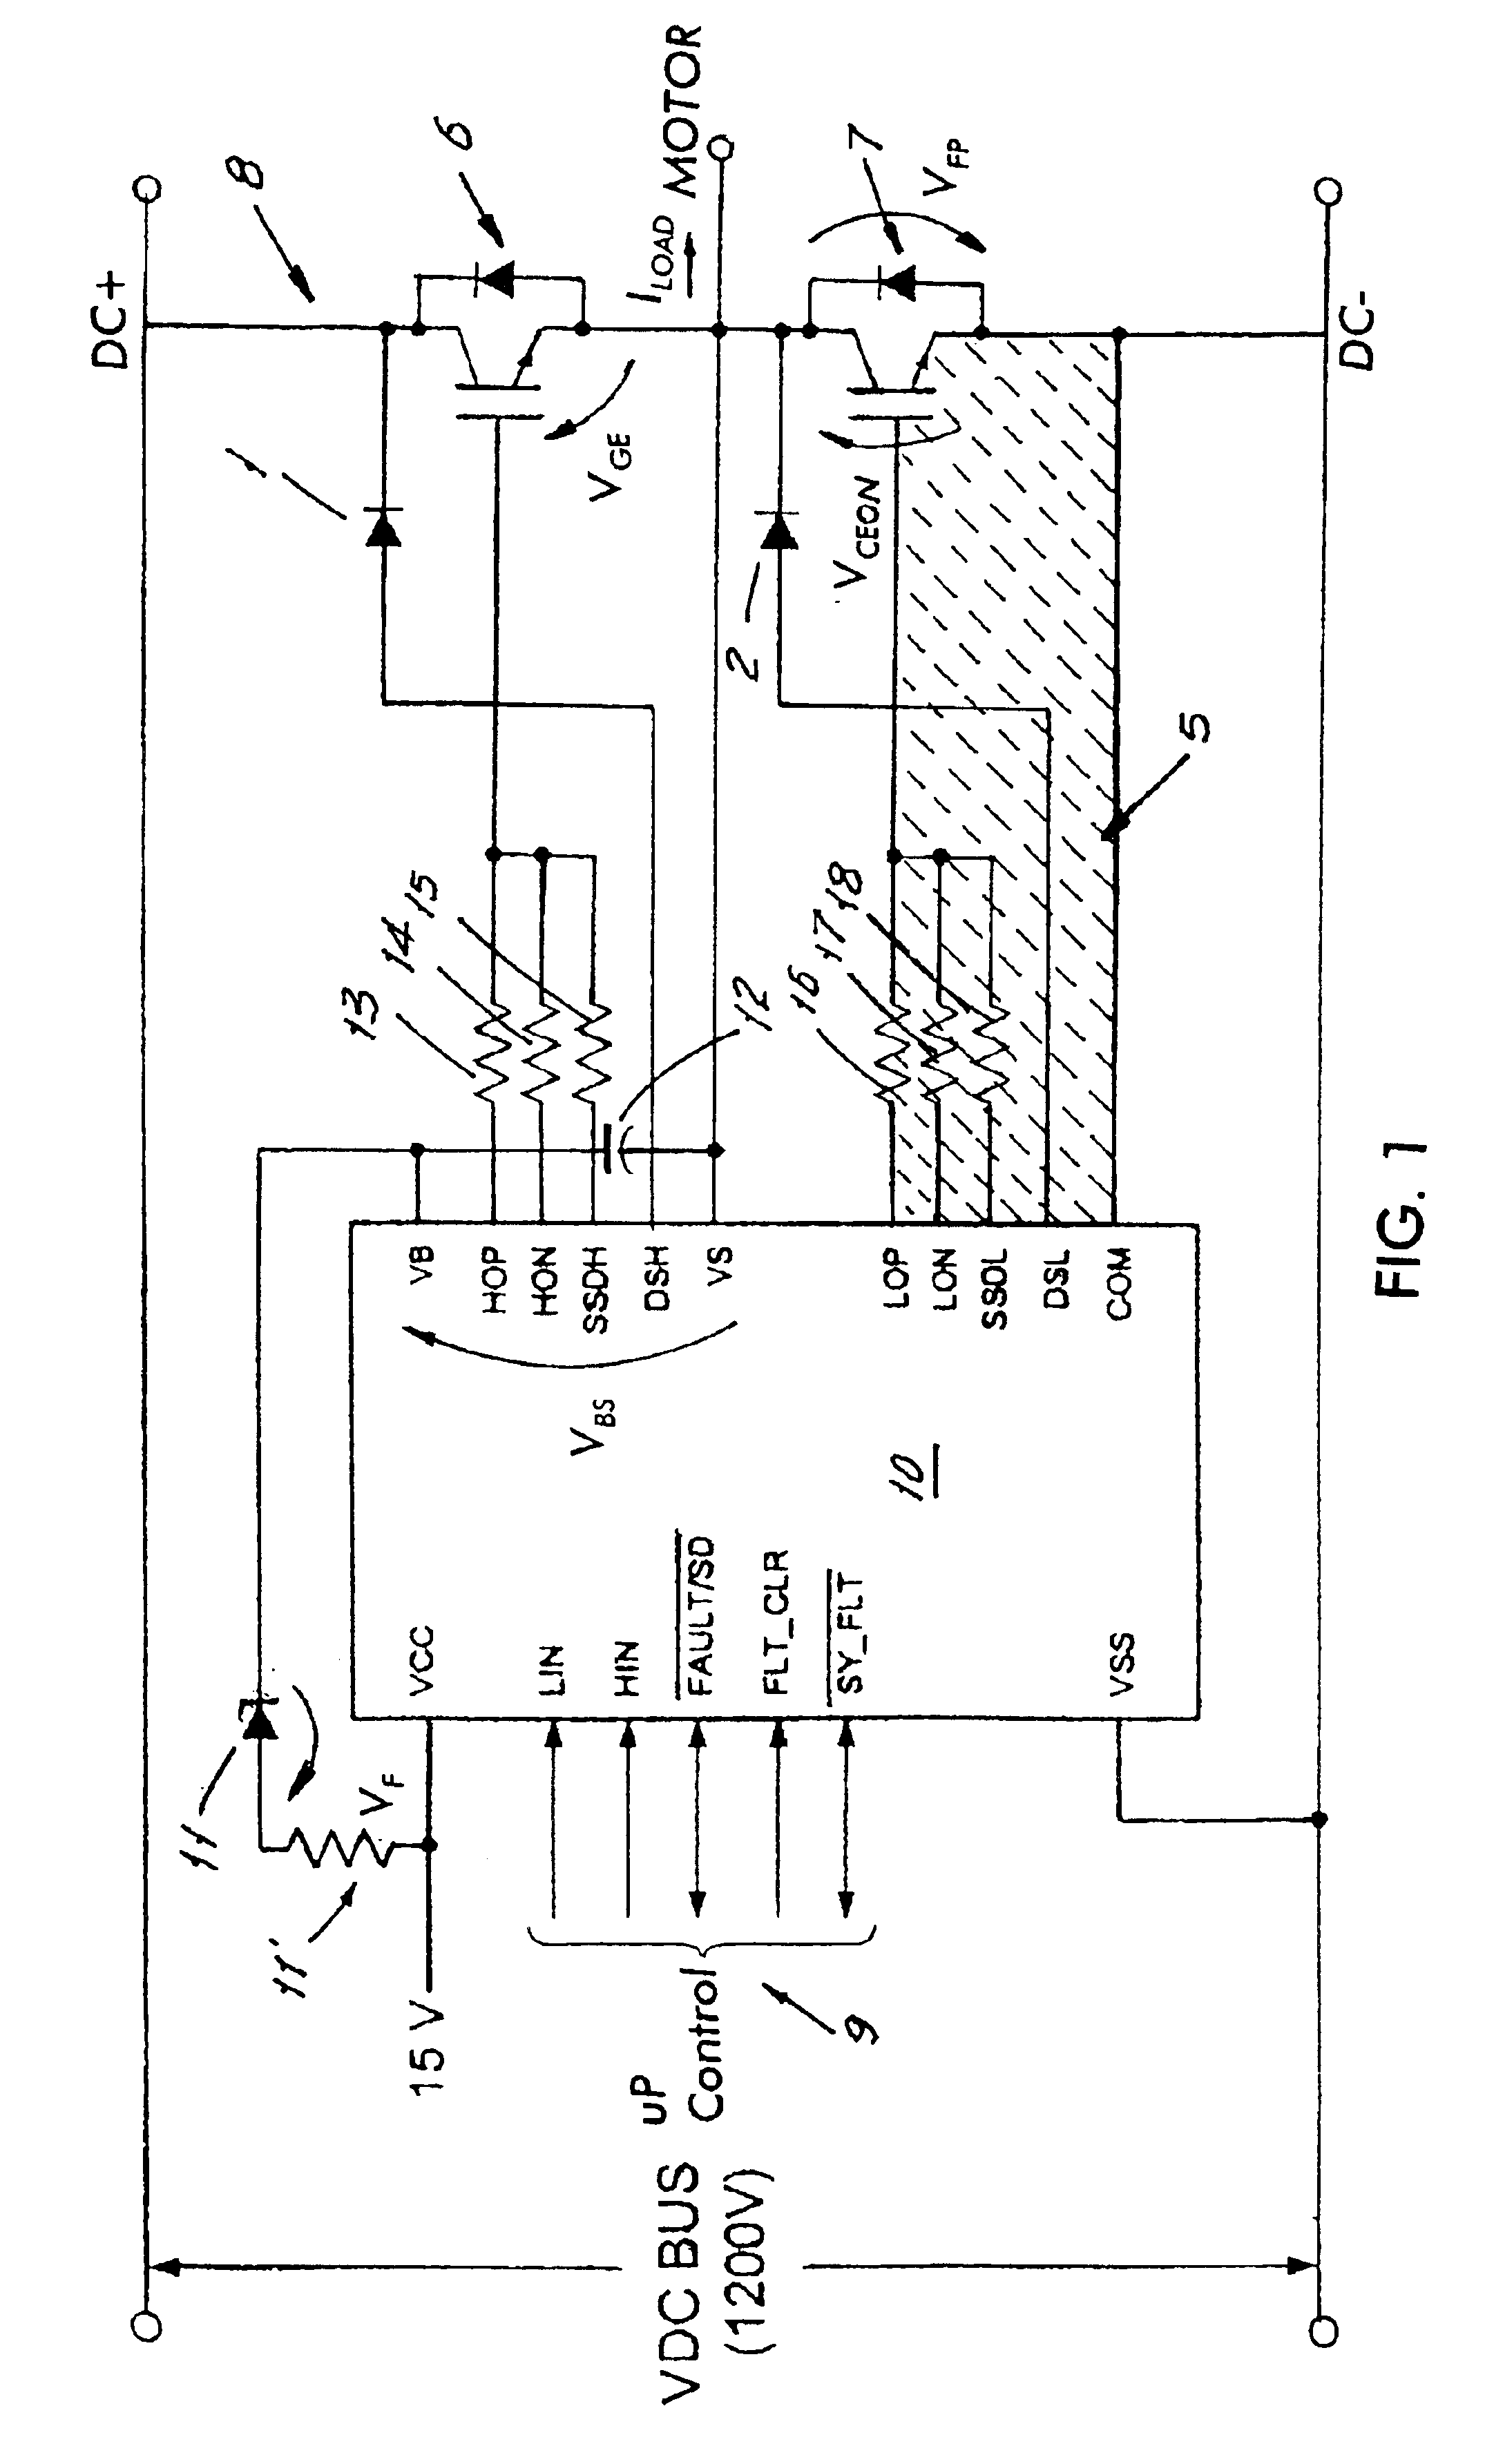 Half-bridge high voltage gate driver providing protection of a transistor